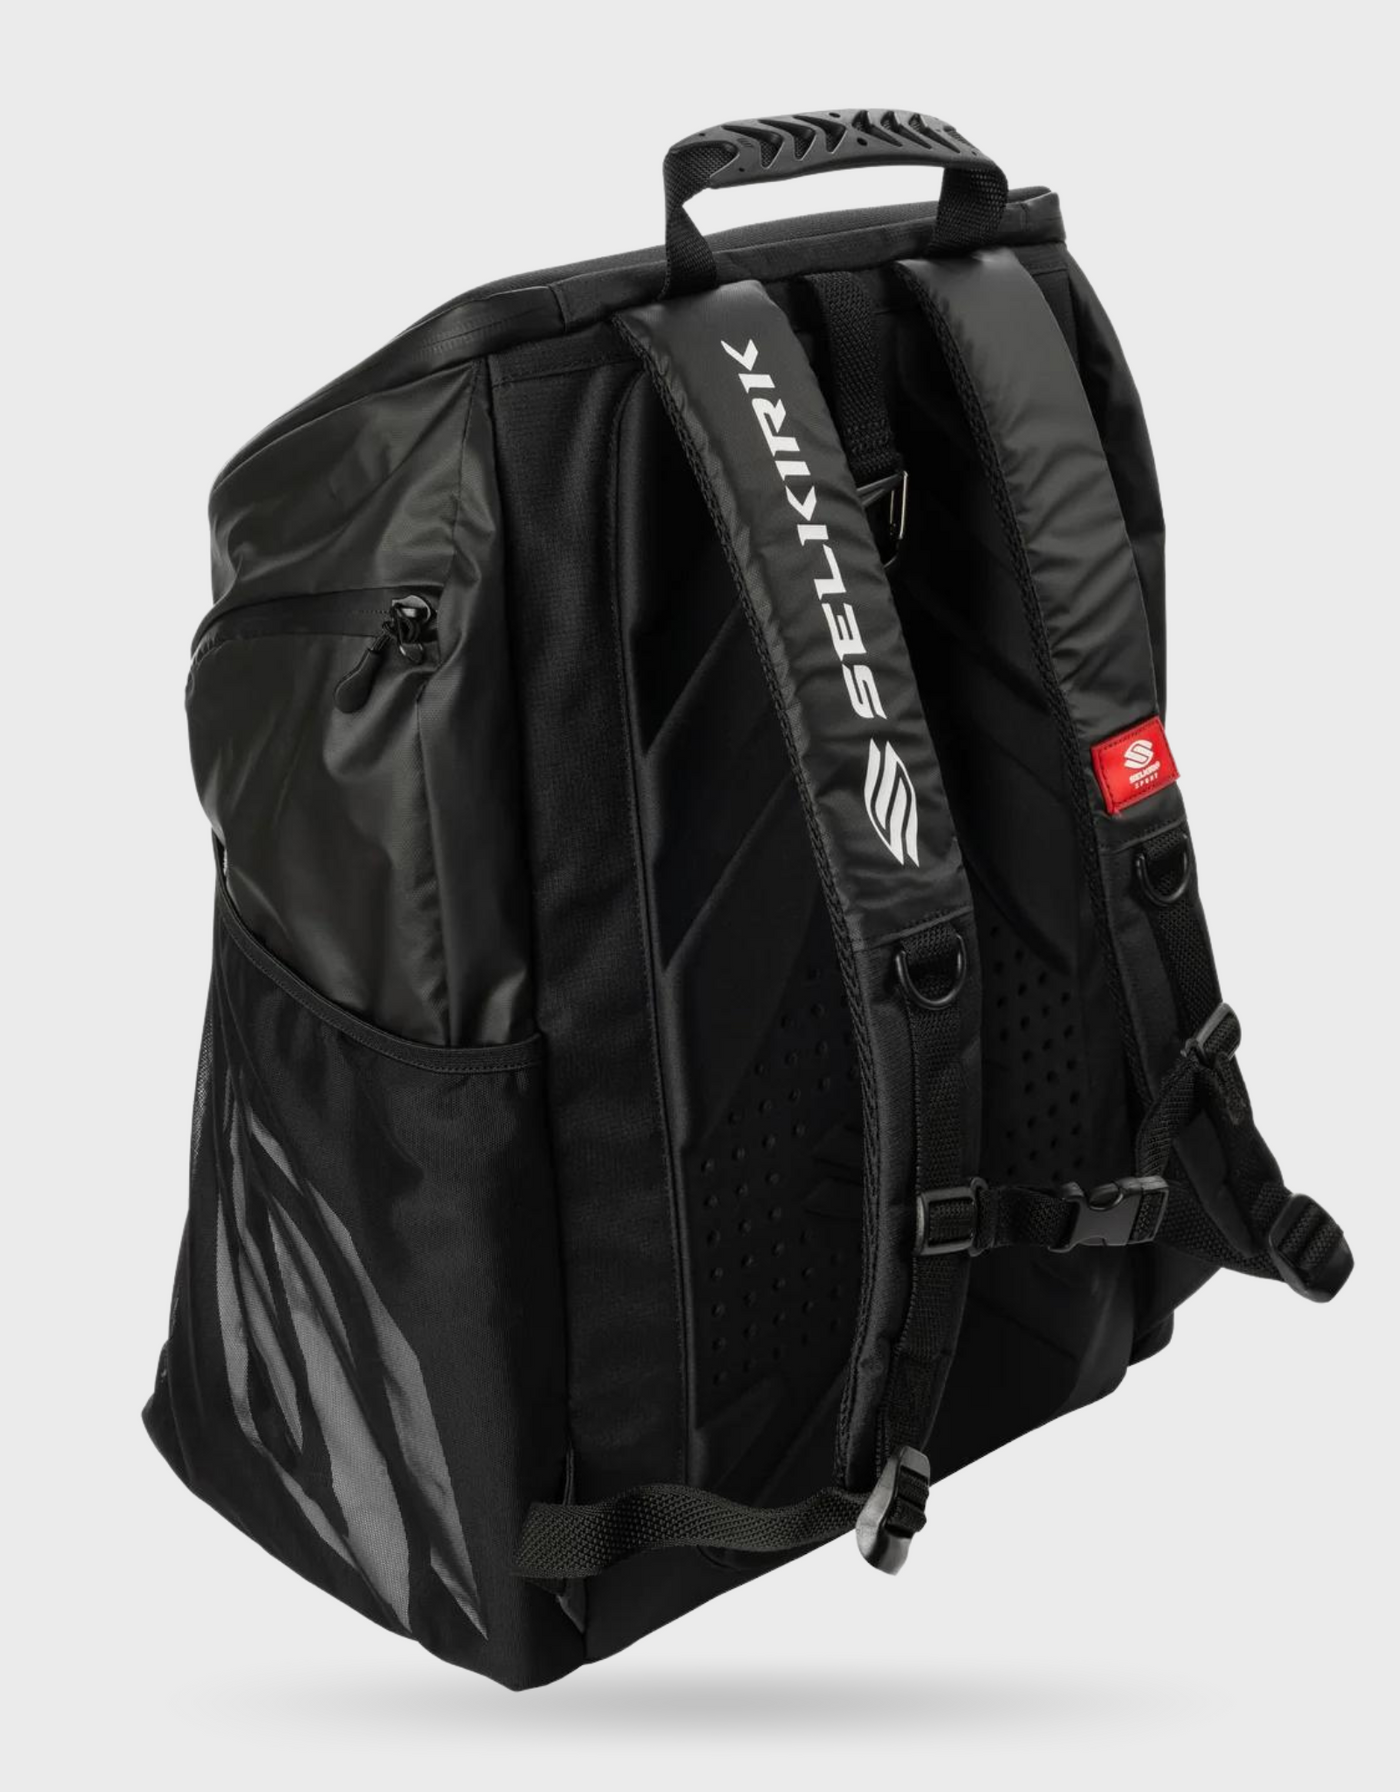 Proline School Bag with Rain Cover : Amazon.in: Computers & Accessories